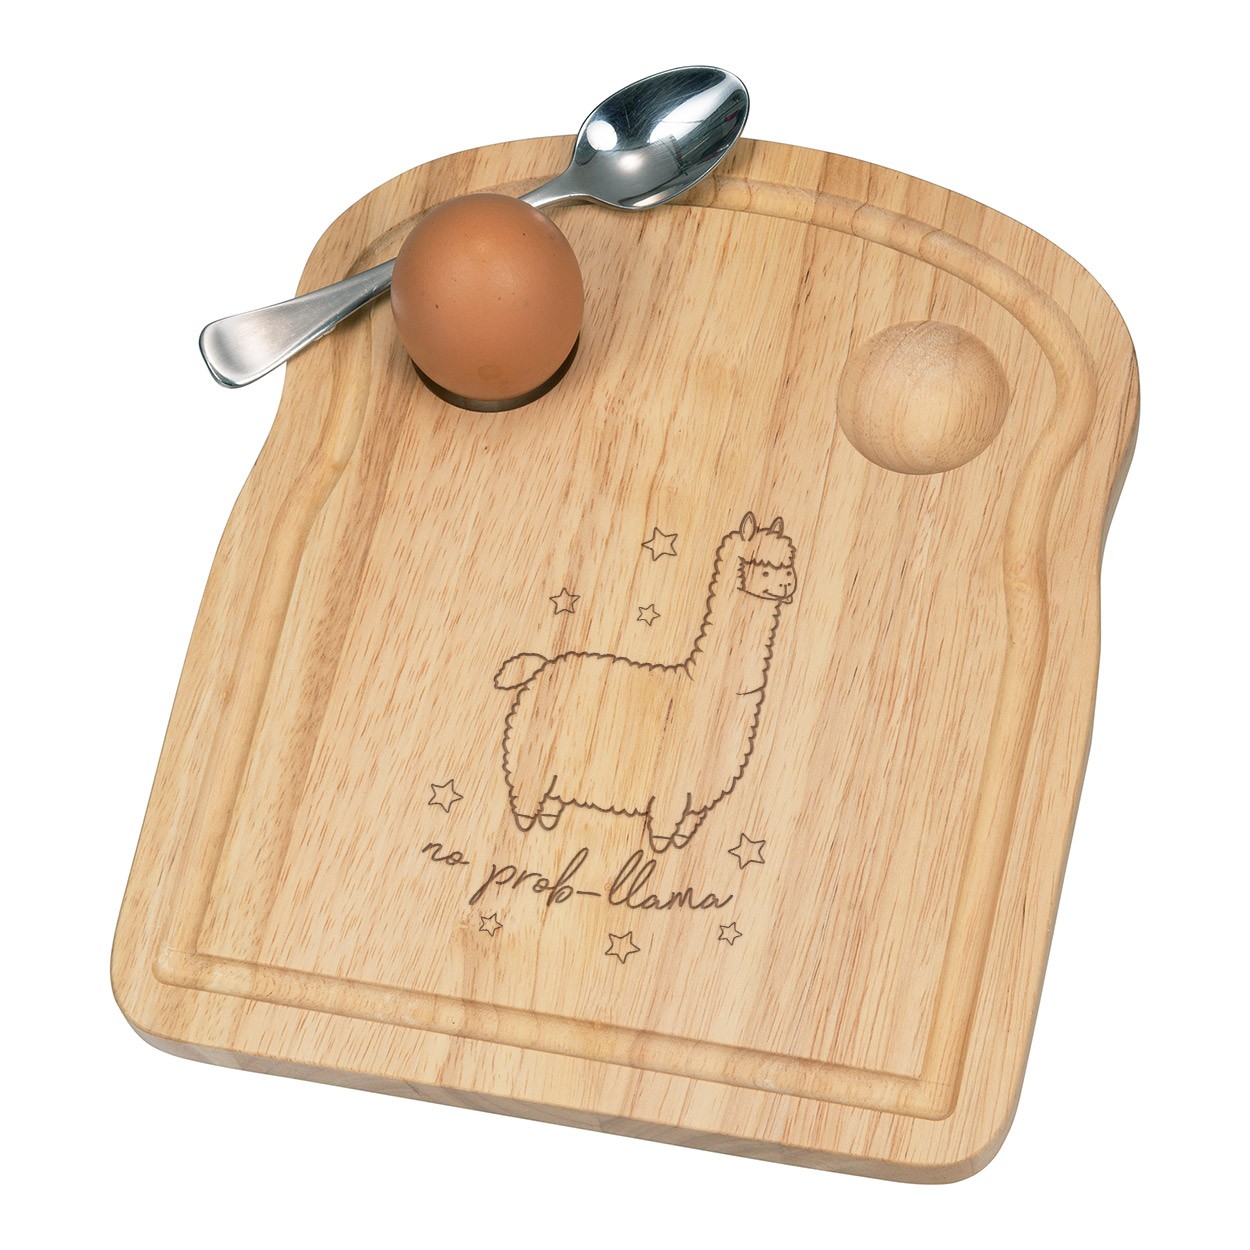 No Prob-Llama Breakfast Dippy Egg Cup Board Wooden